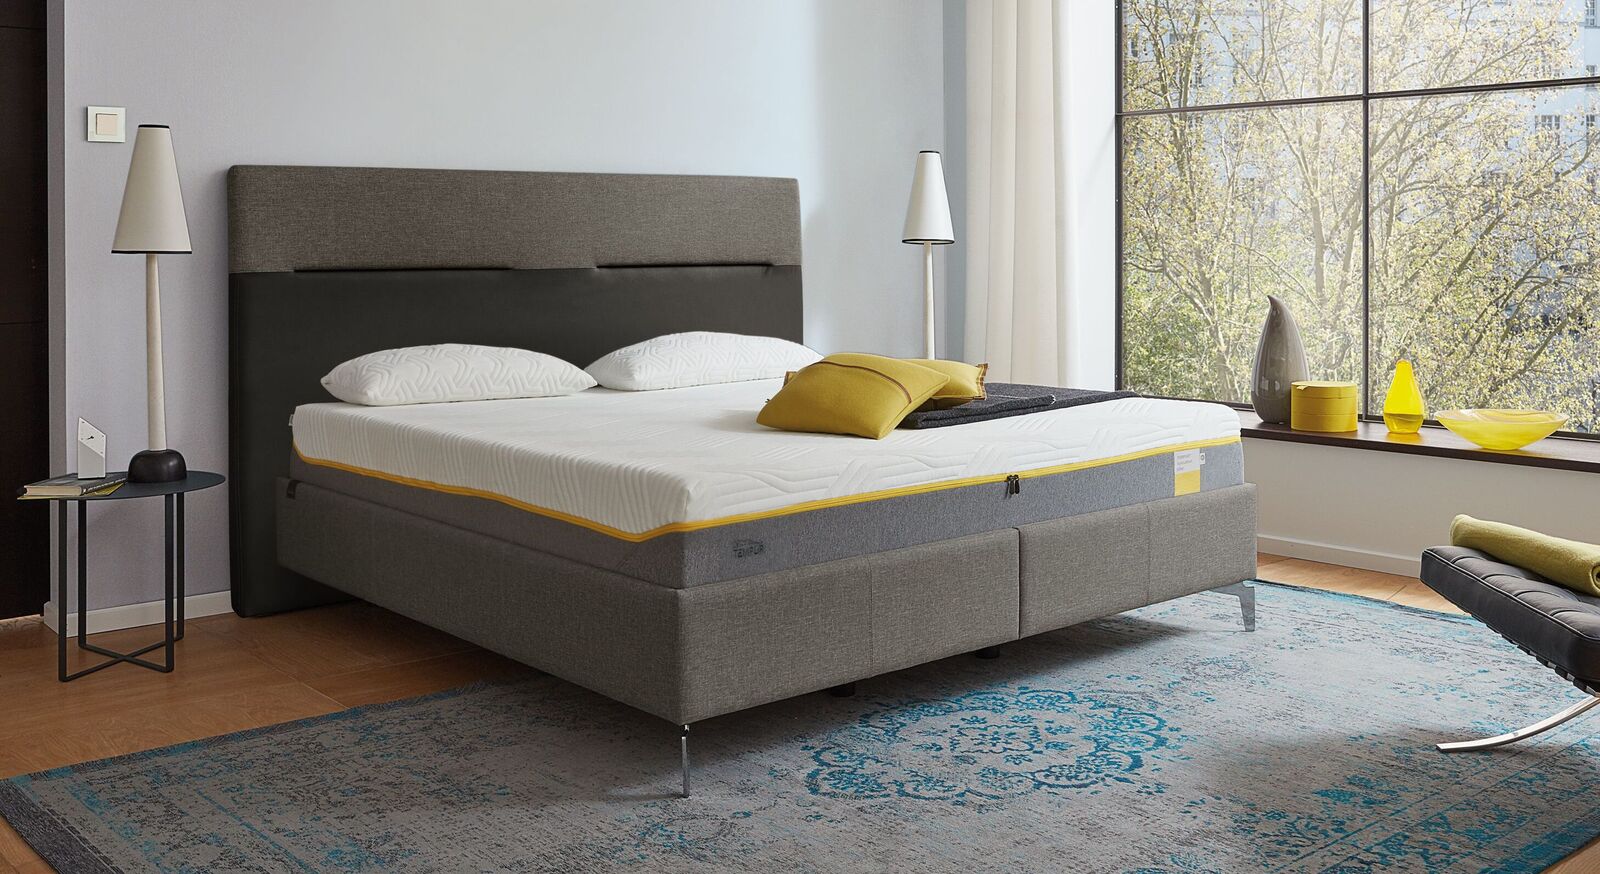 Hochwertiges TEMPUR Bett Relax Texture in verschiedenen Farben